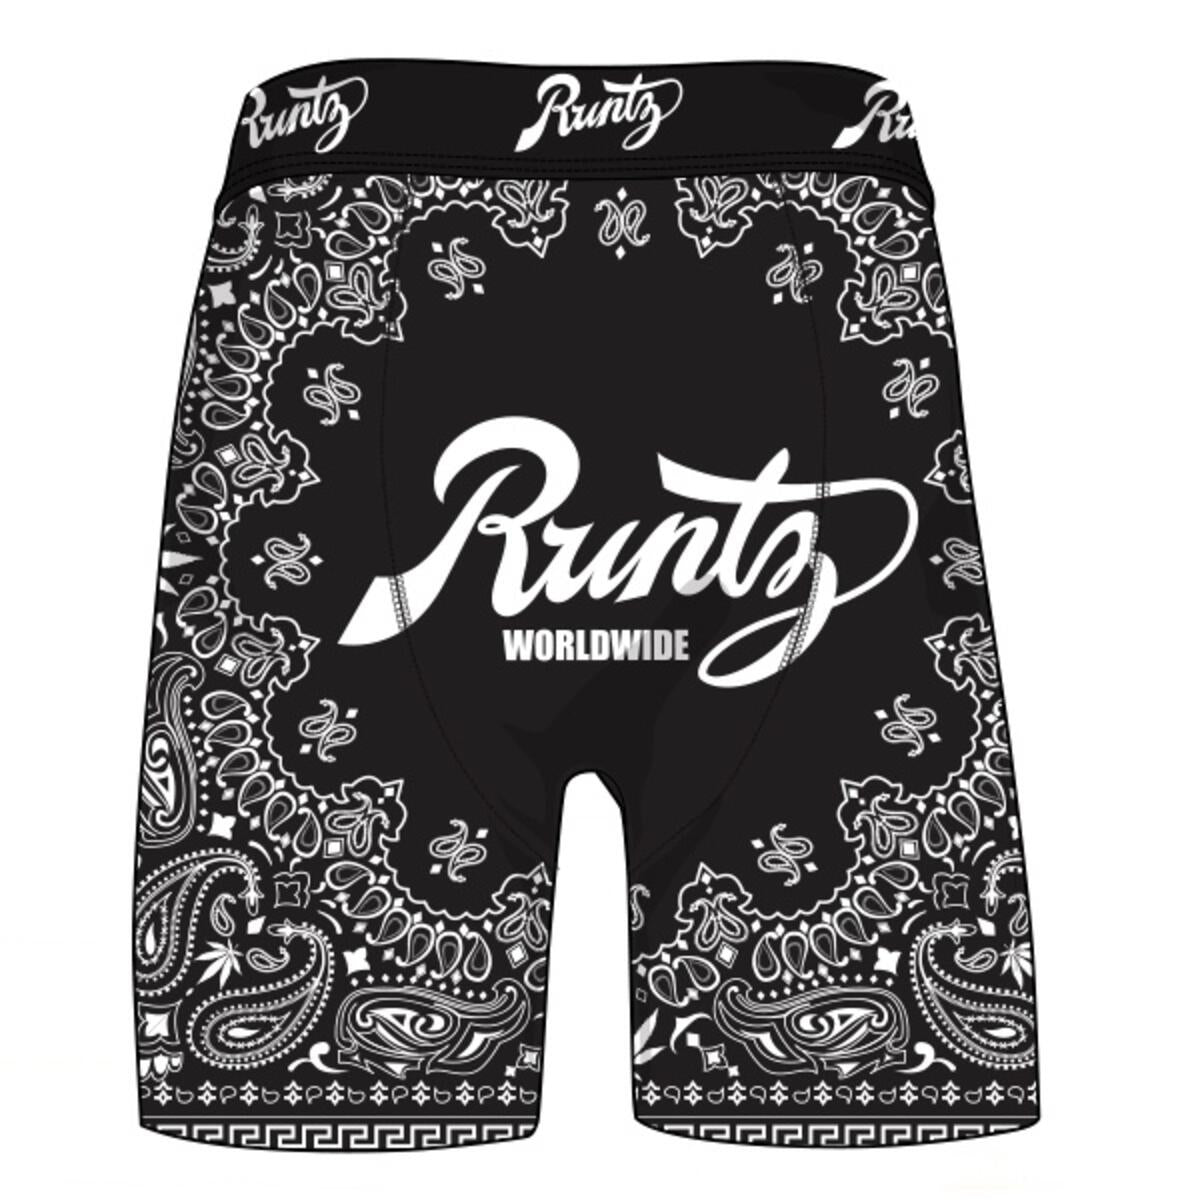 Runtz-Black Bandana Underwear